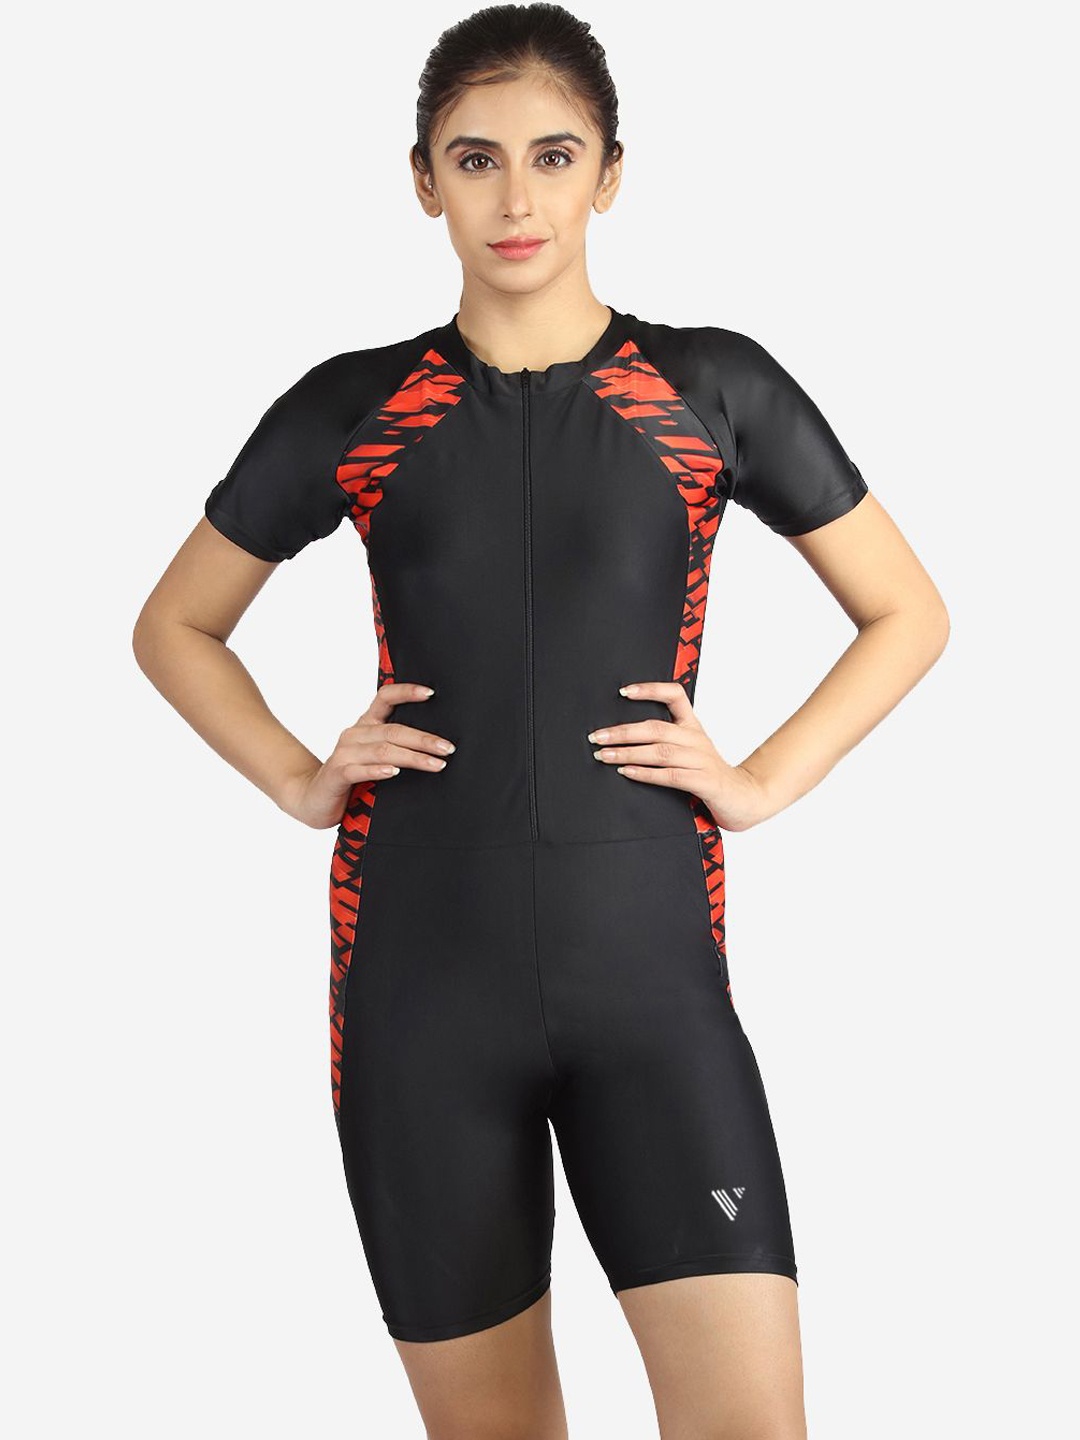 

VELOZ Abstract Printed Round Neck Sports Swim Legsuit, Black